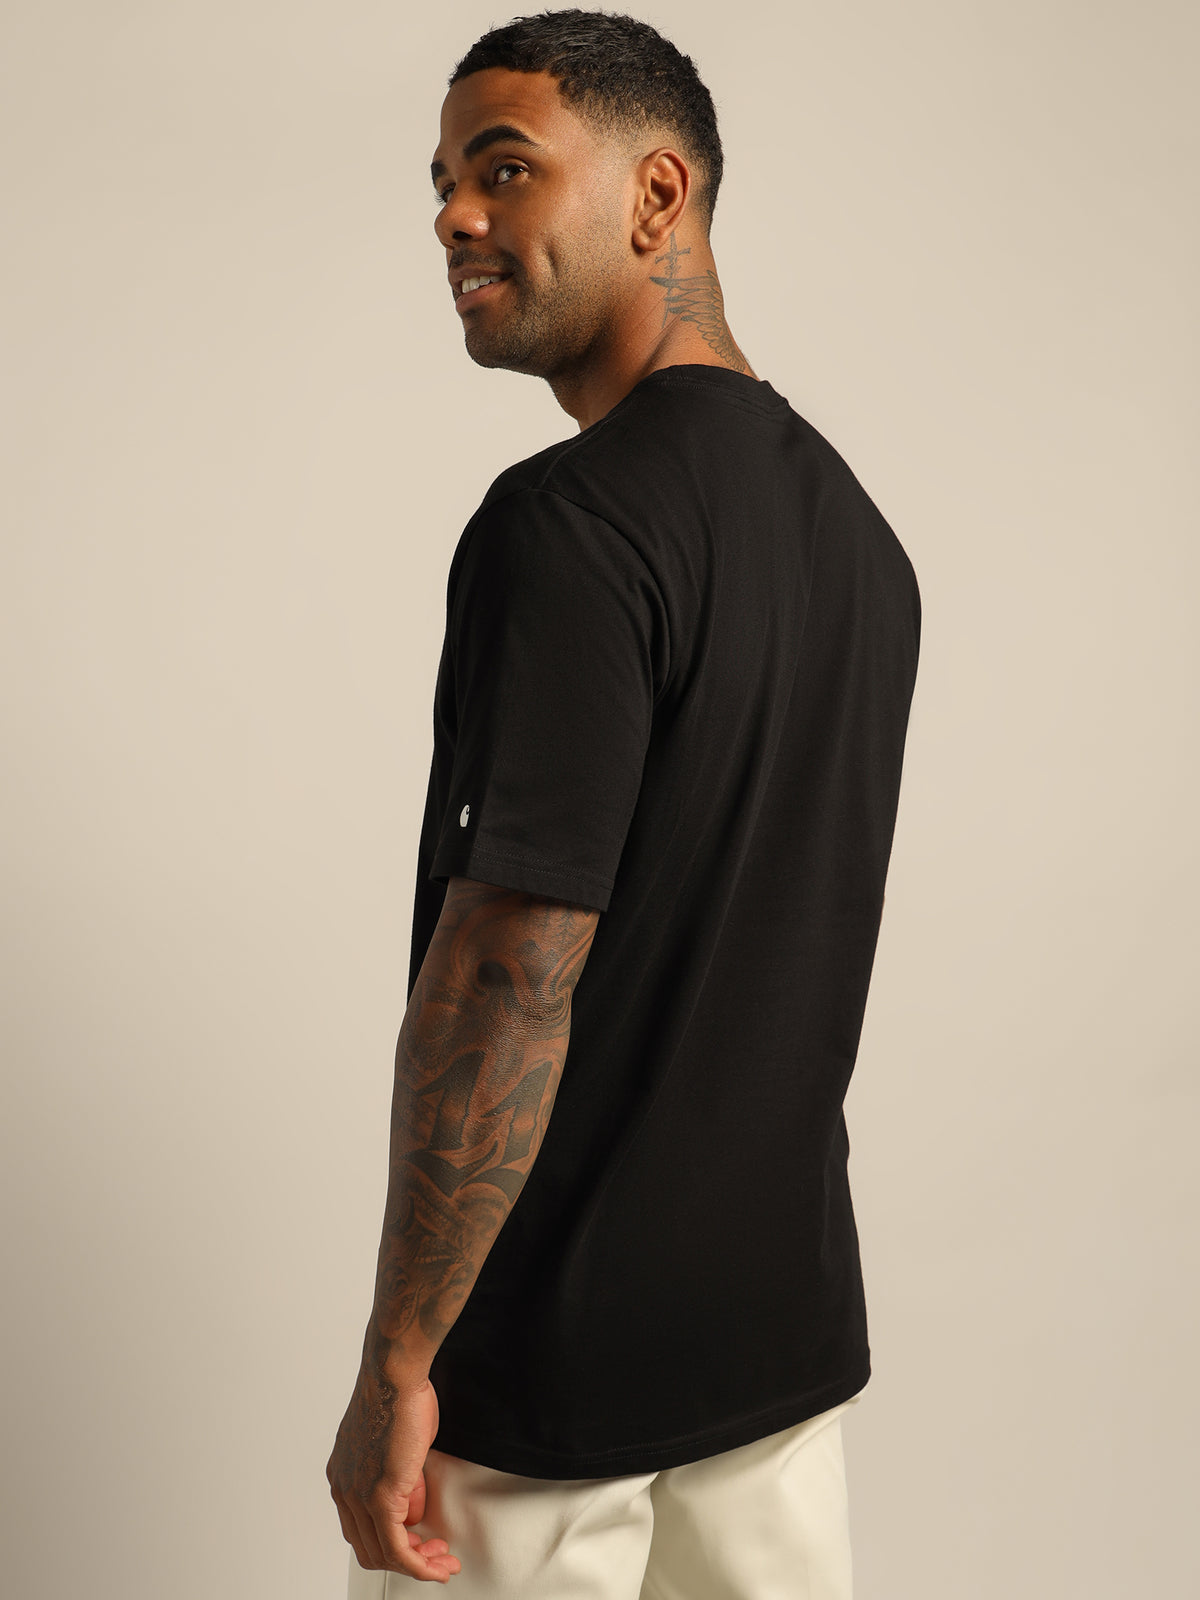 Short Sleeve Base T-Shirt in Black